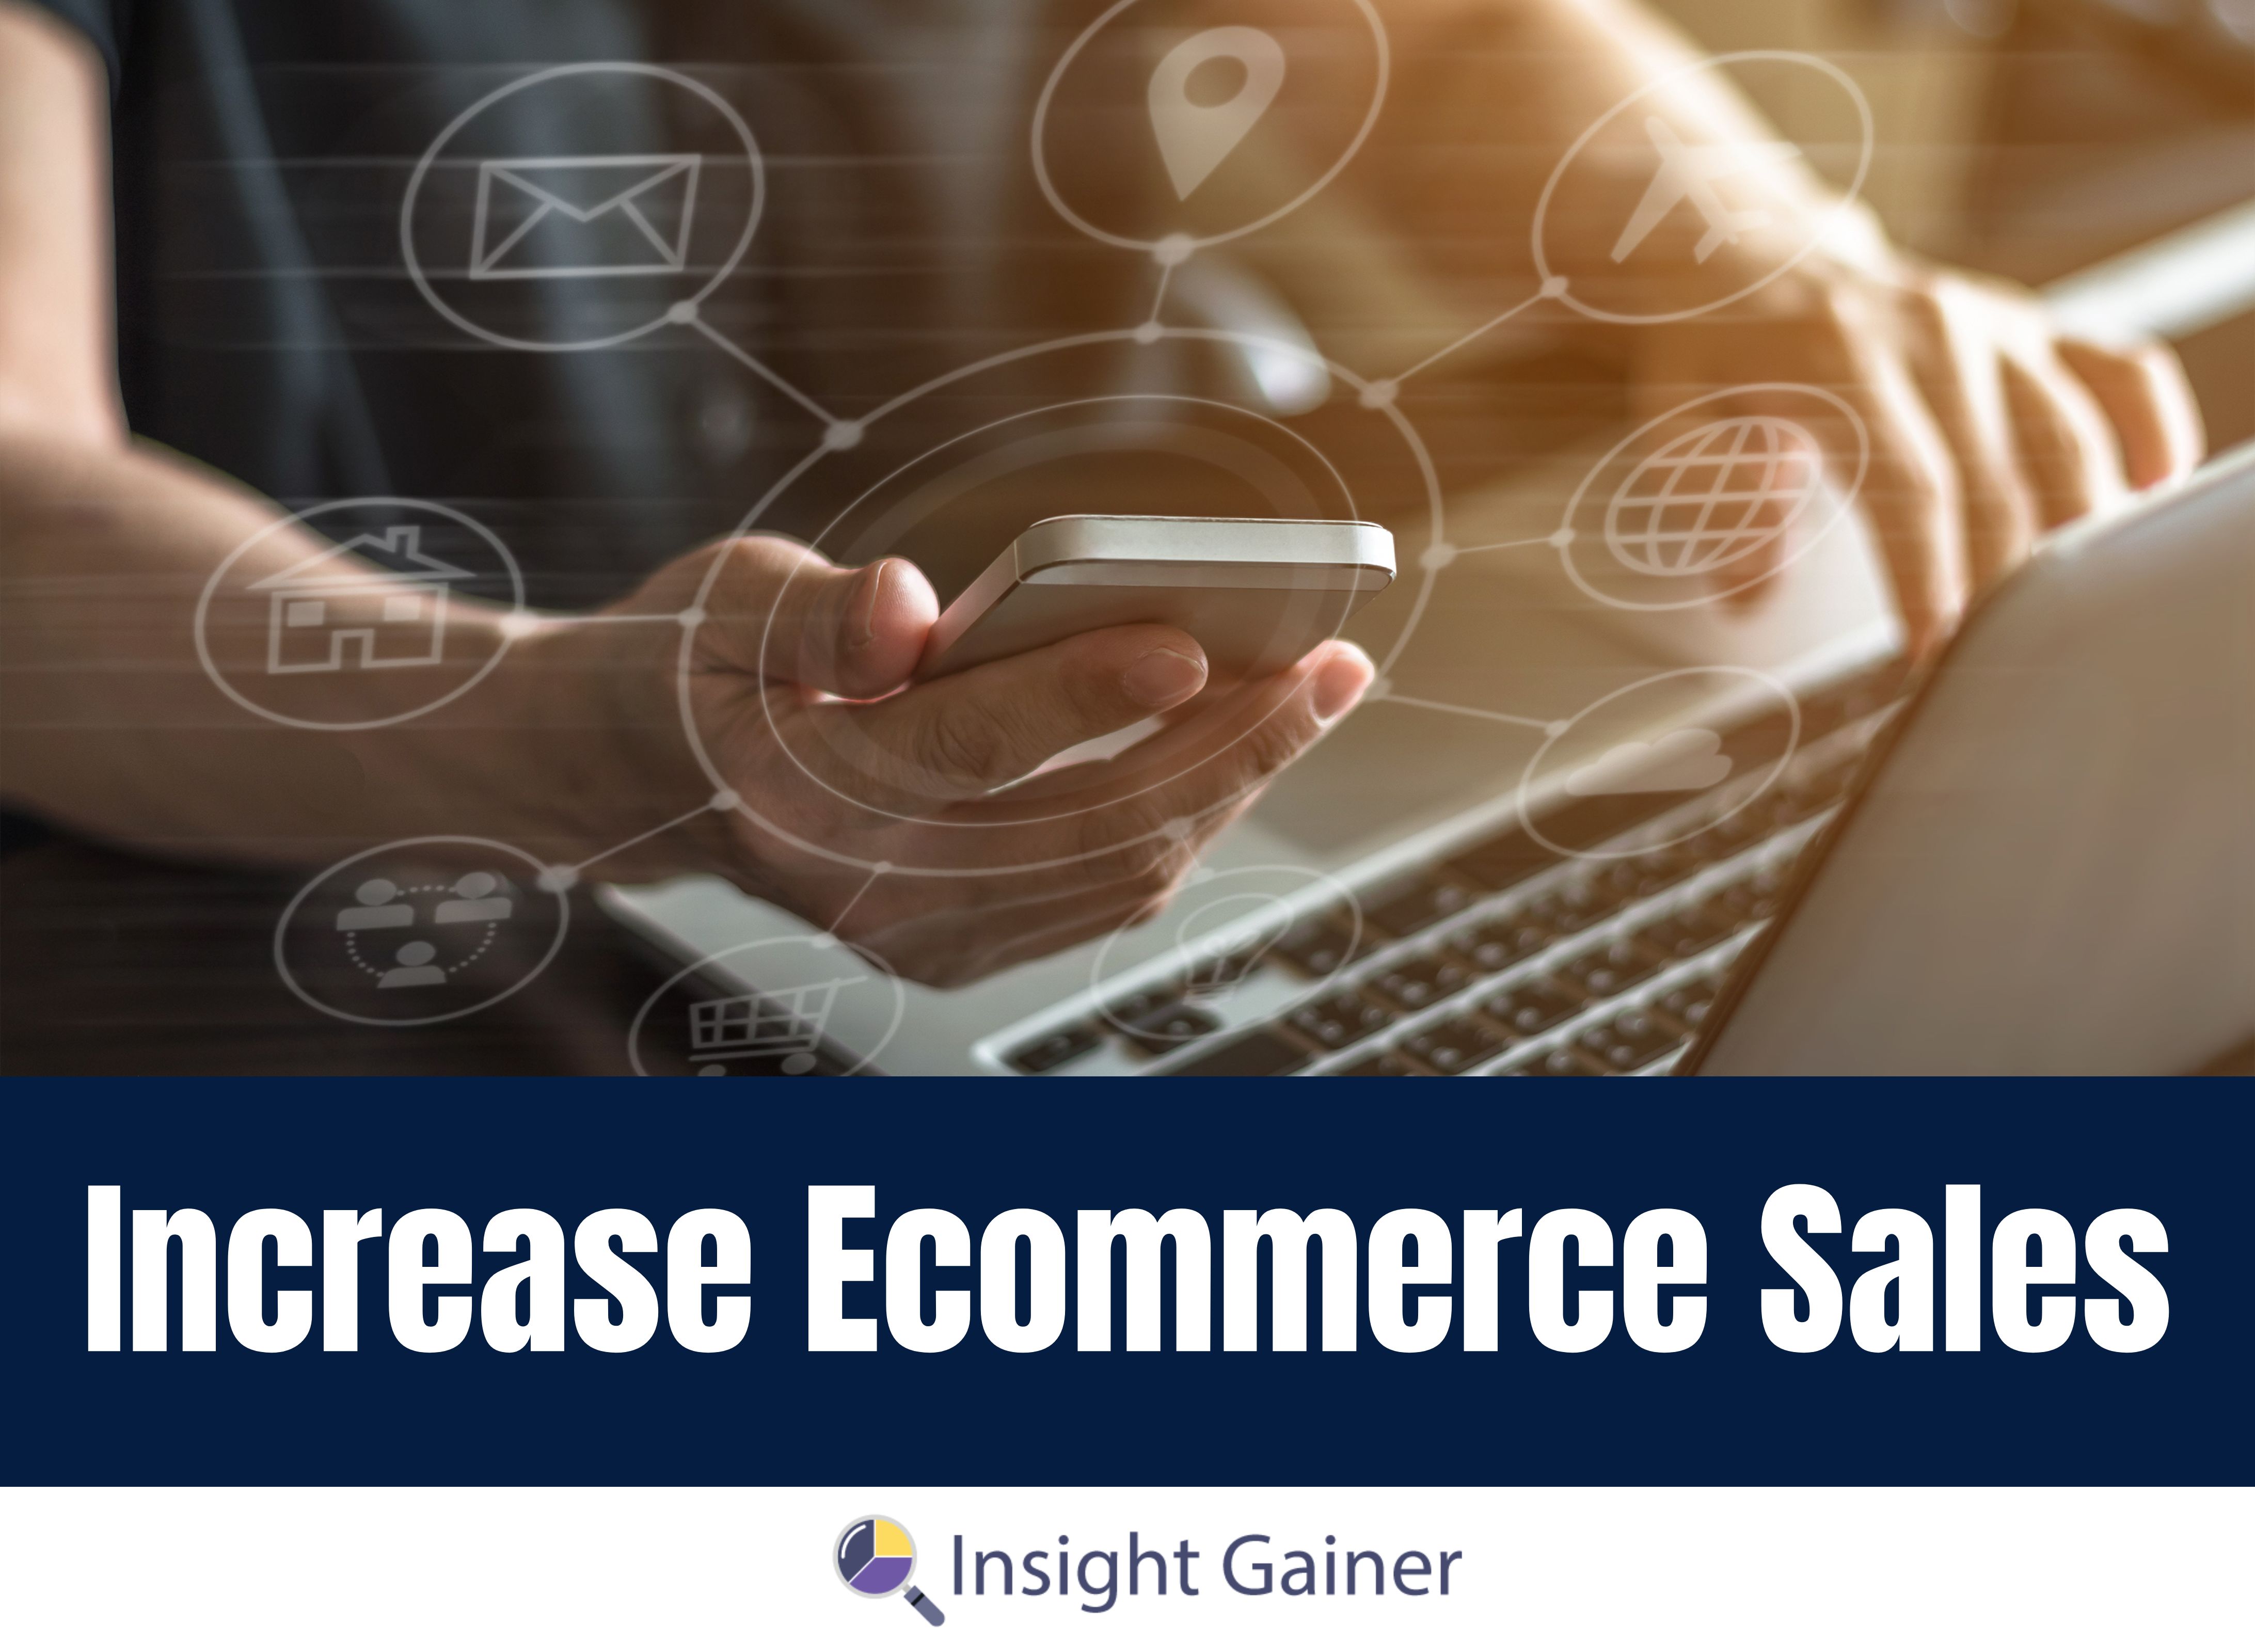 10 Strategic SEO Tips To Increase Ecommerce Sales